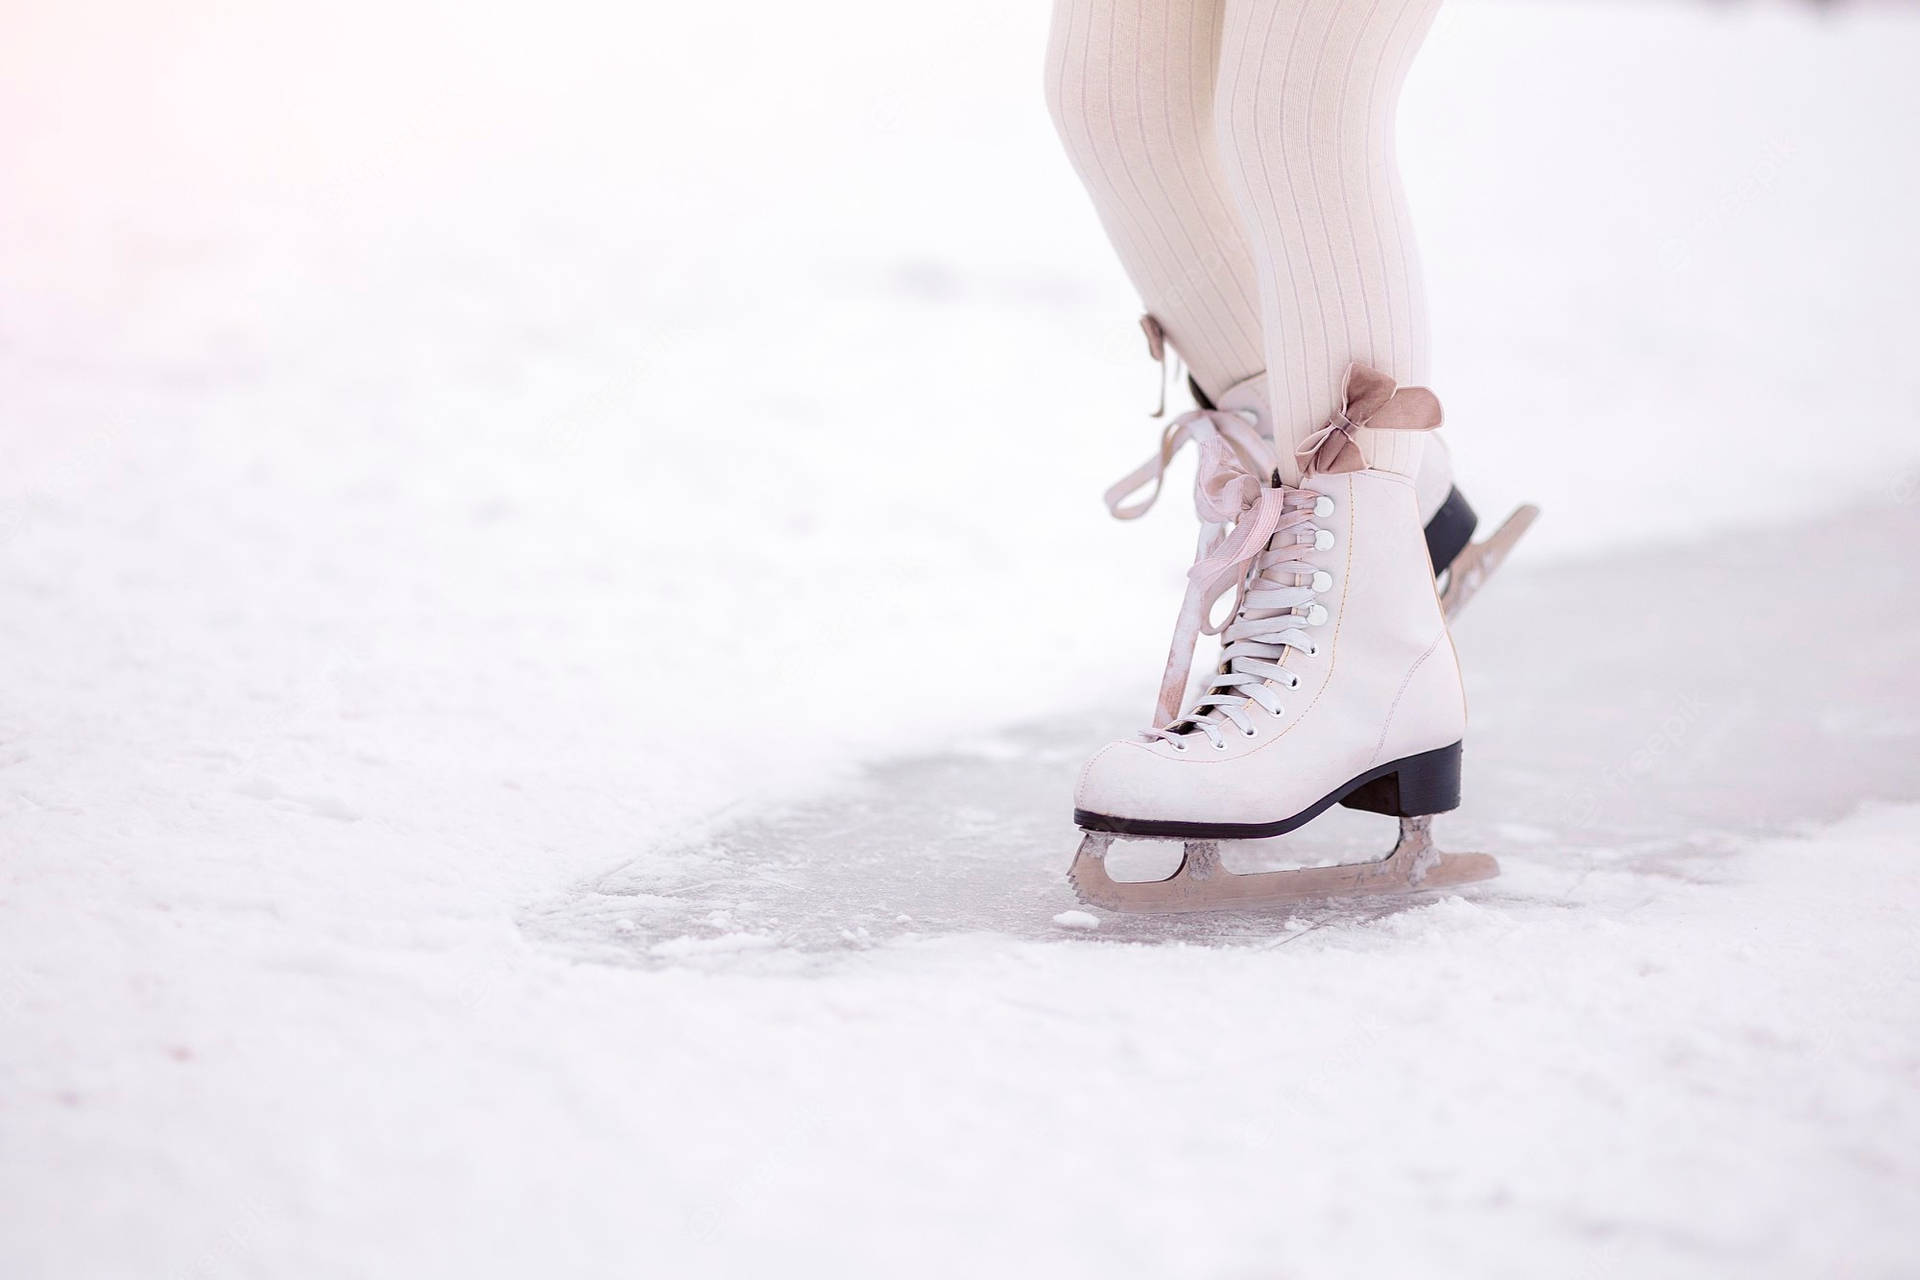 Cute Ice Skating Boots Wallpaper